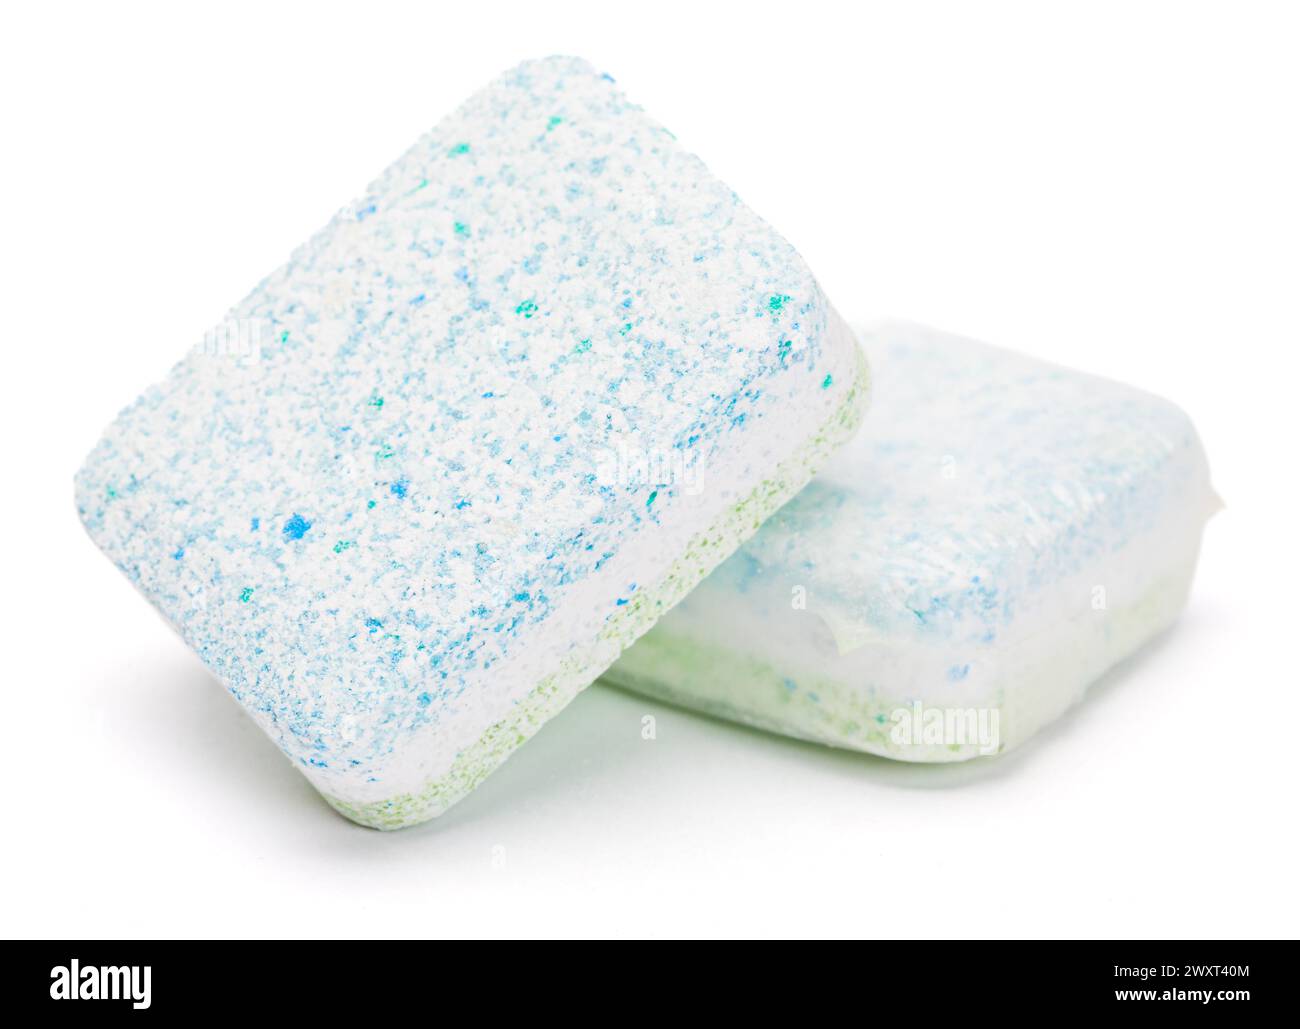 Dishwashing detergent tablets on white background Stock Photo